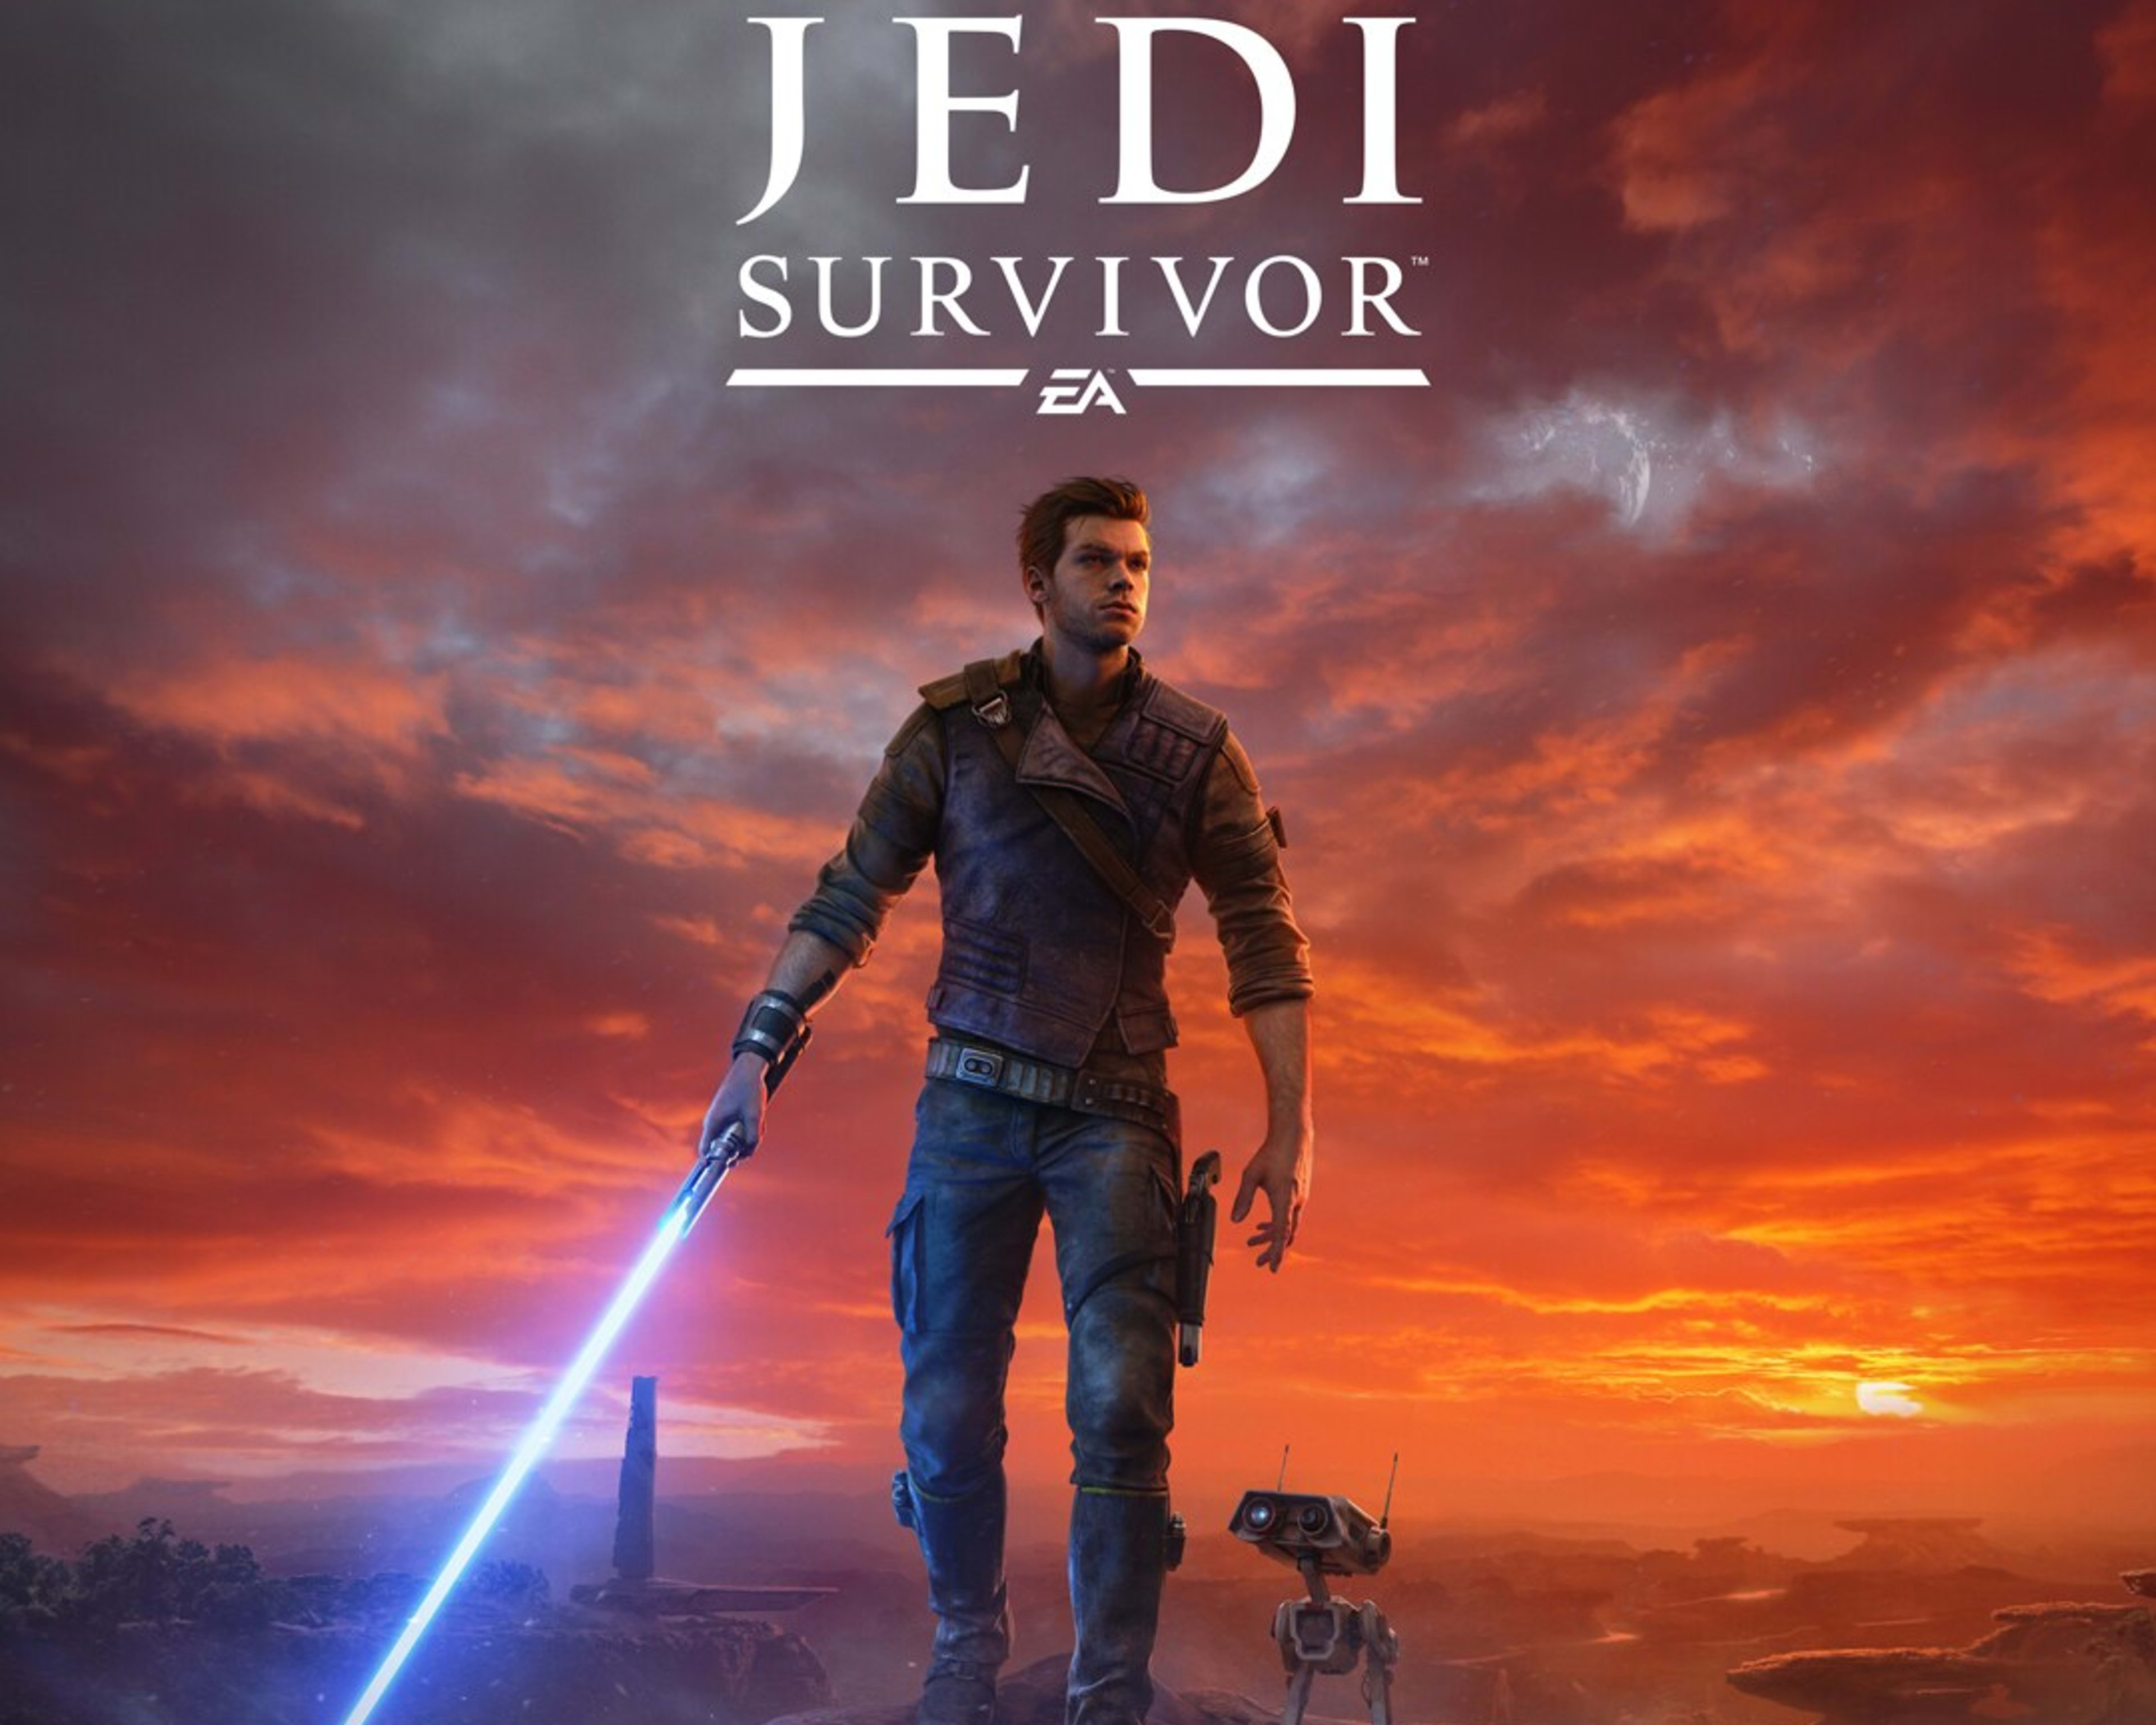 STAR WARS Jedi: Survivor EA Play code for PC